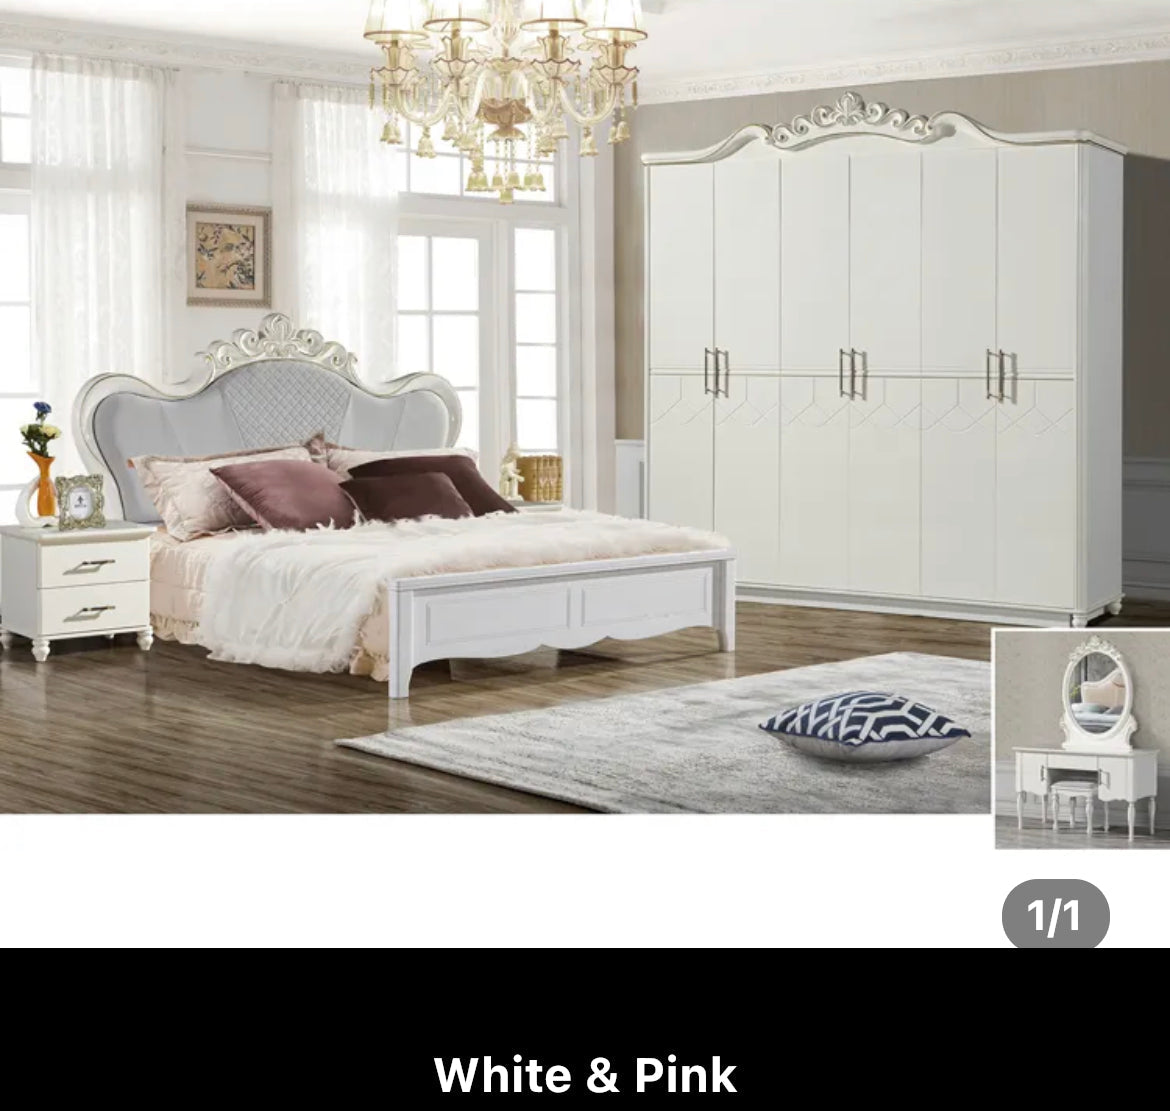 Bedroom Furniture Set Luxury French Baroque Design Bedroom Bed Set 